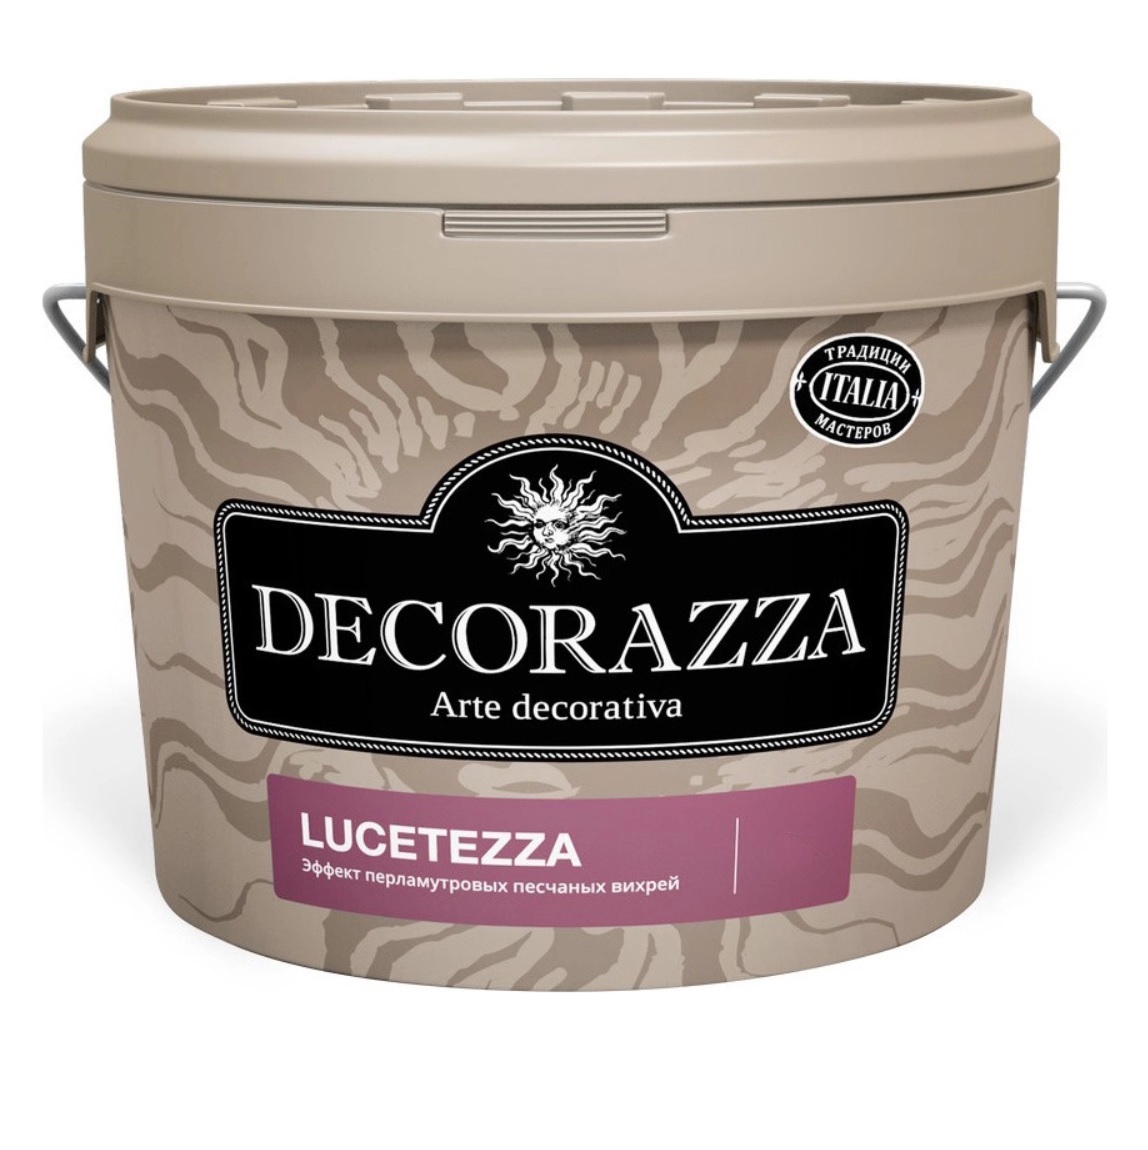 Декоративная краска Decorazza lucetezza база aluminium 5.0кг краска декоративная decorazza alcantara 1 л 0 7 кг